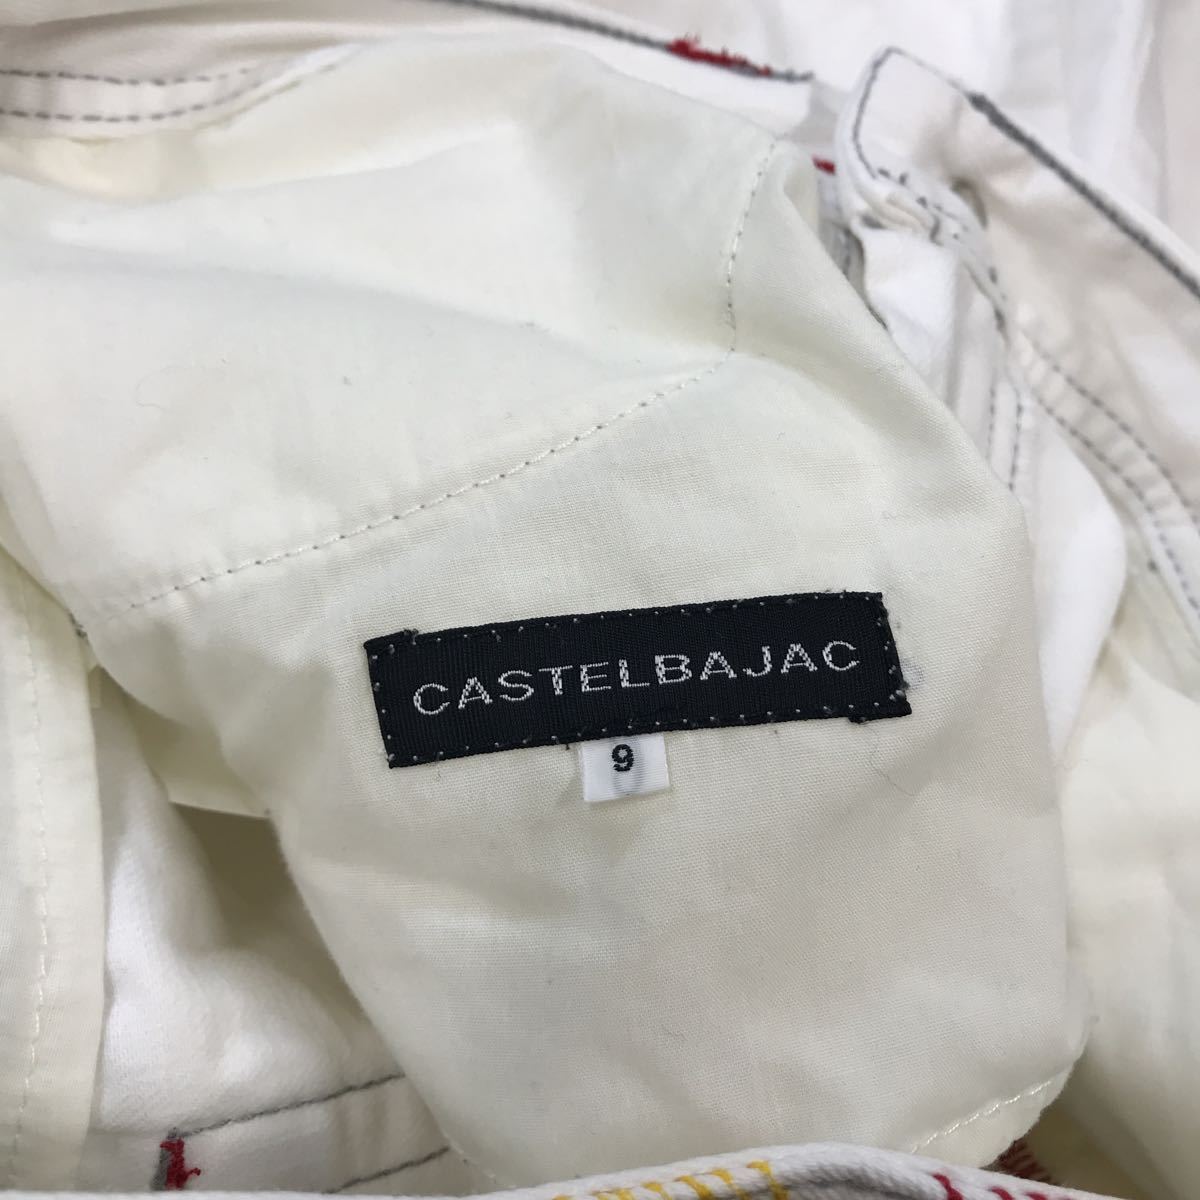 CASTEL BAJAC Castelbajac white Denim pants stretch embroidery lady's 9 number M size 28-58a